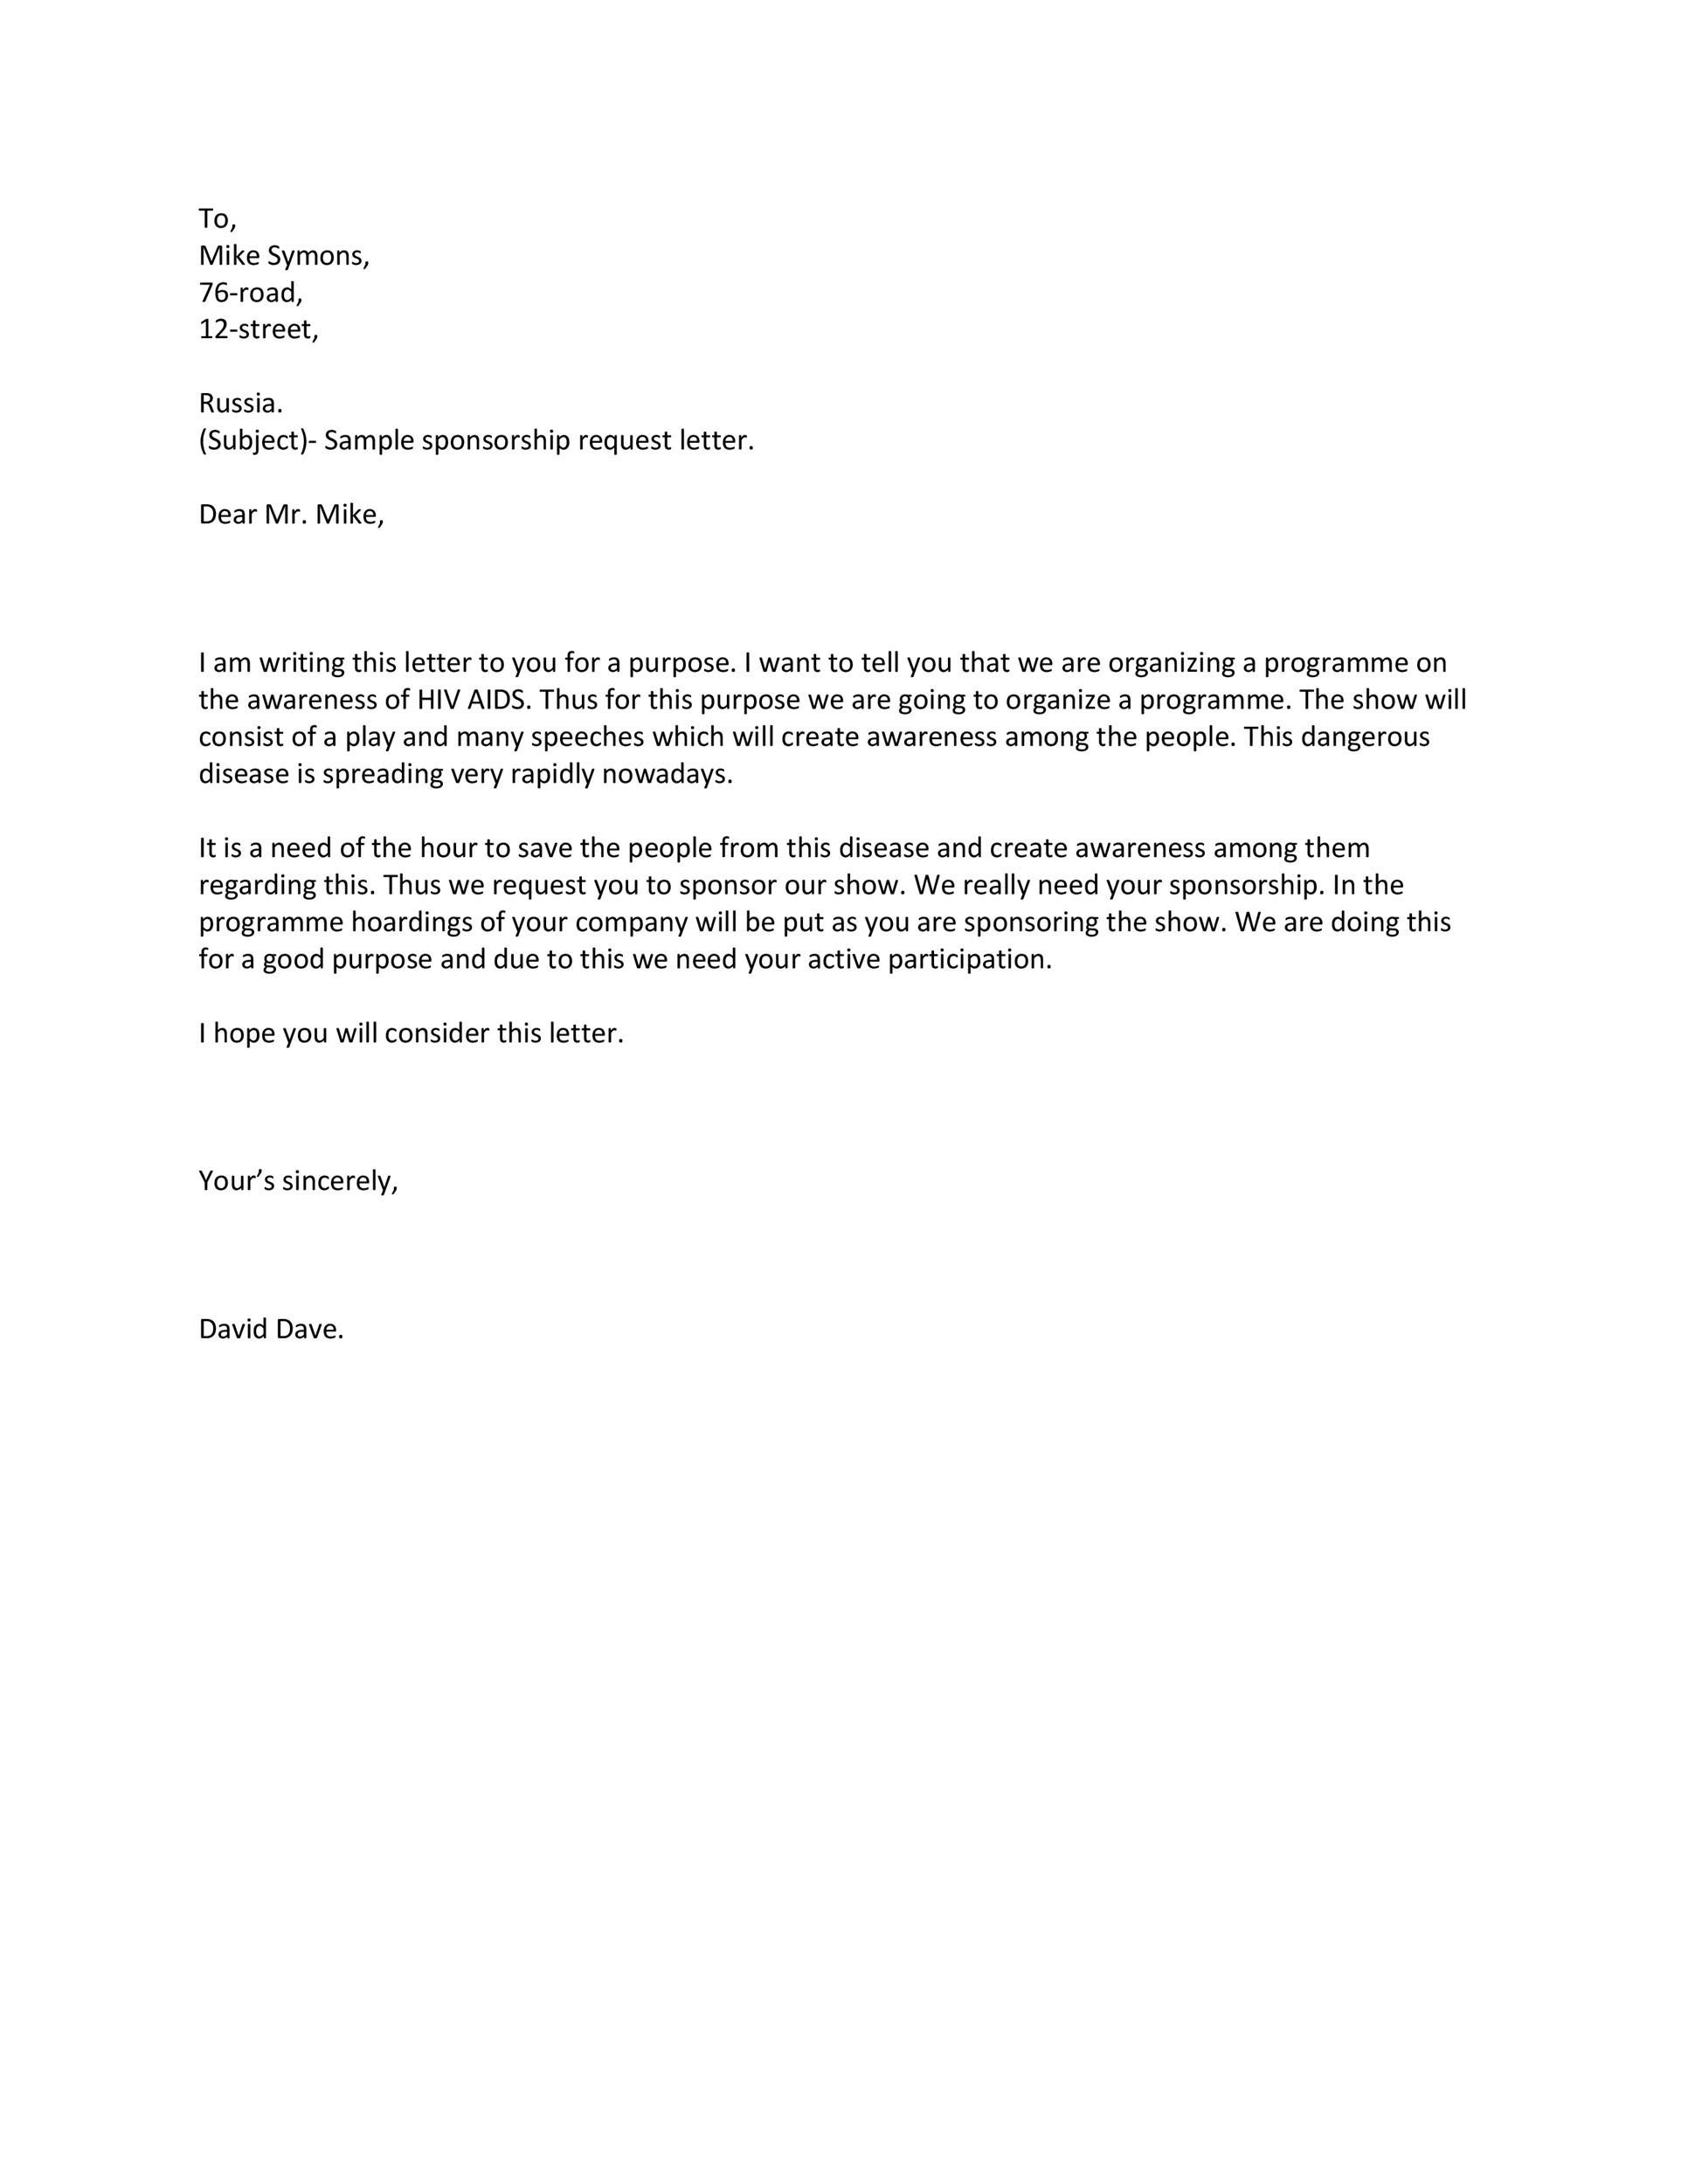 Sample Sponsorship Request Letter Pdf from lh6.googleusercontent.com